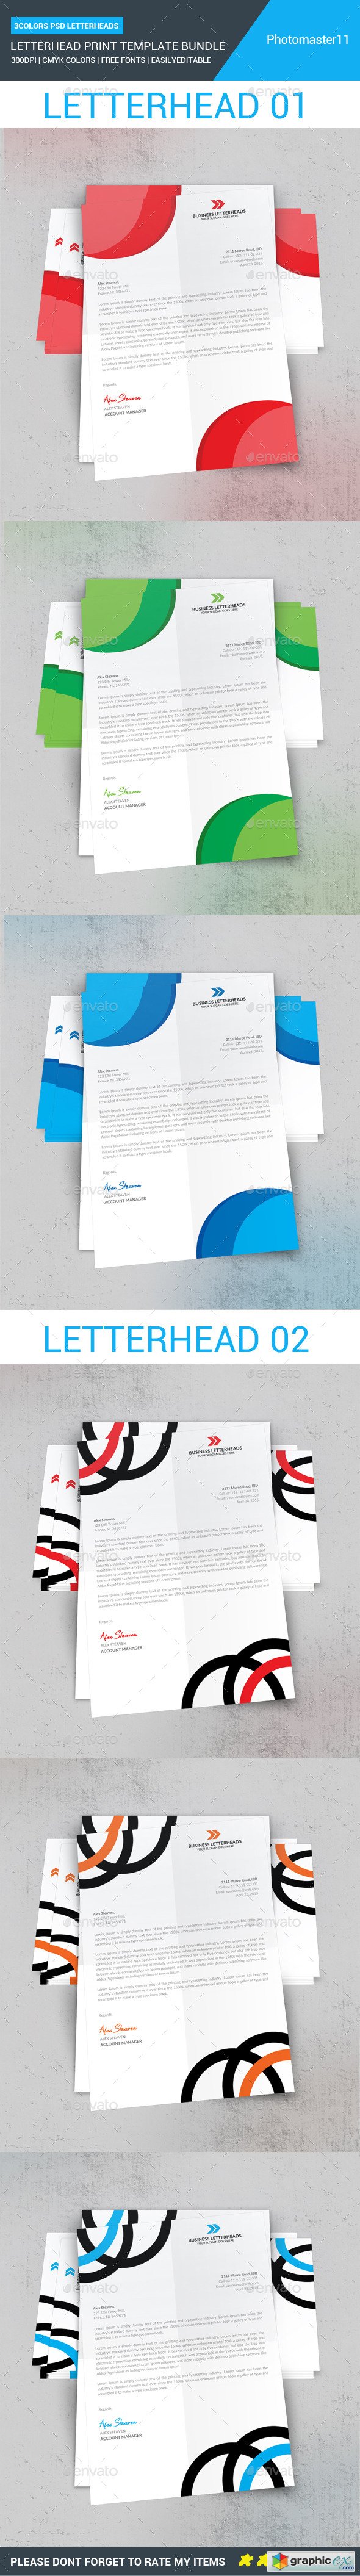 Letterhead Print Templates Bundle